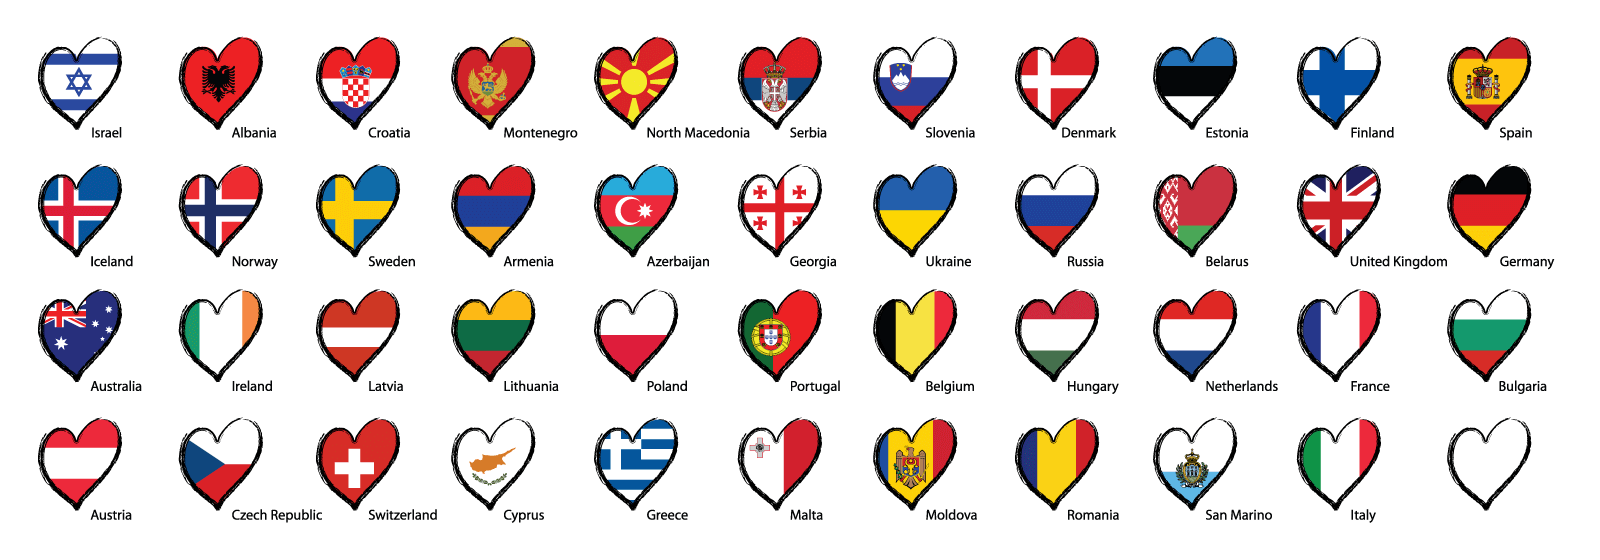 Eurovision Countries Flags